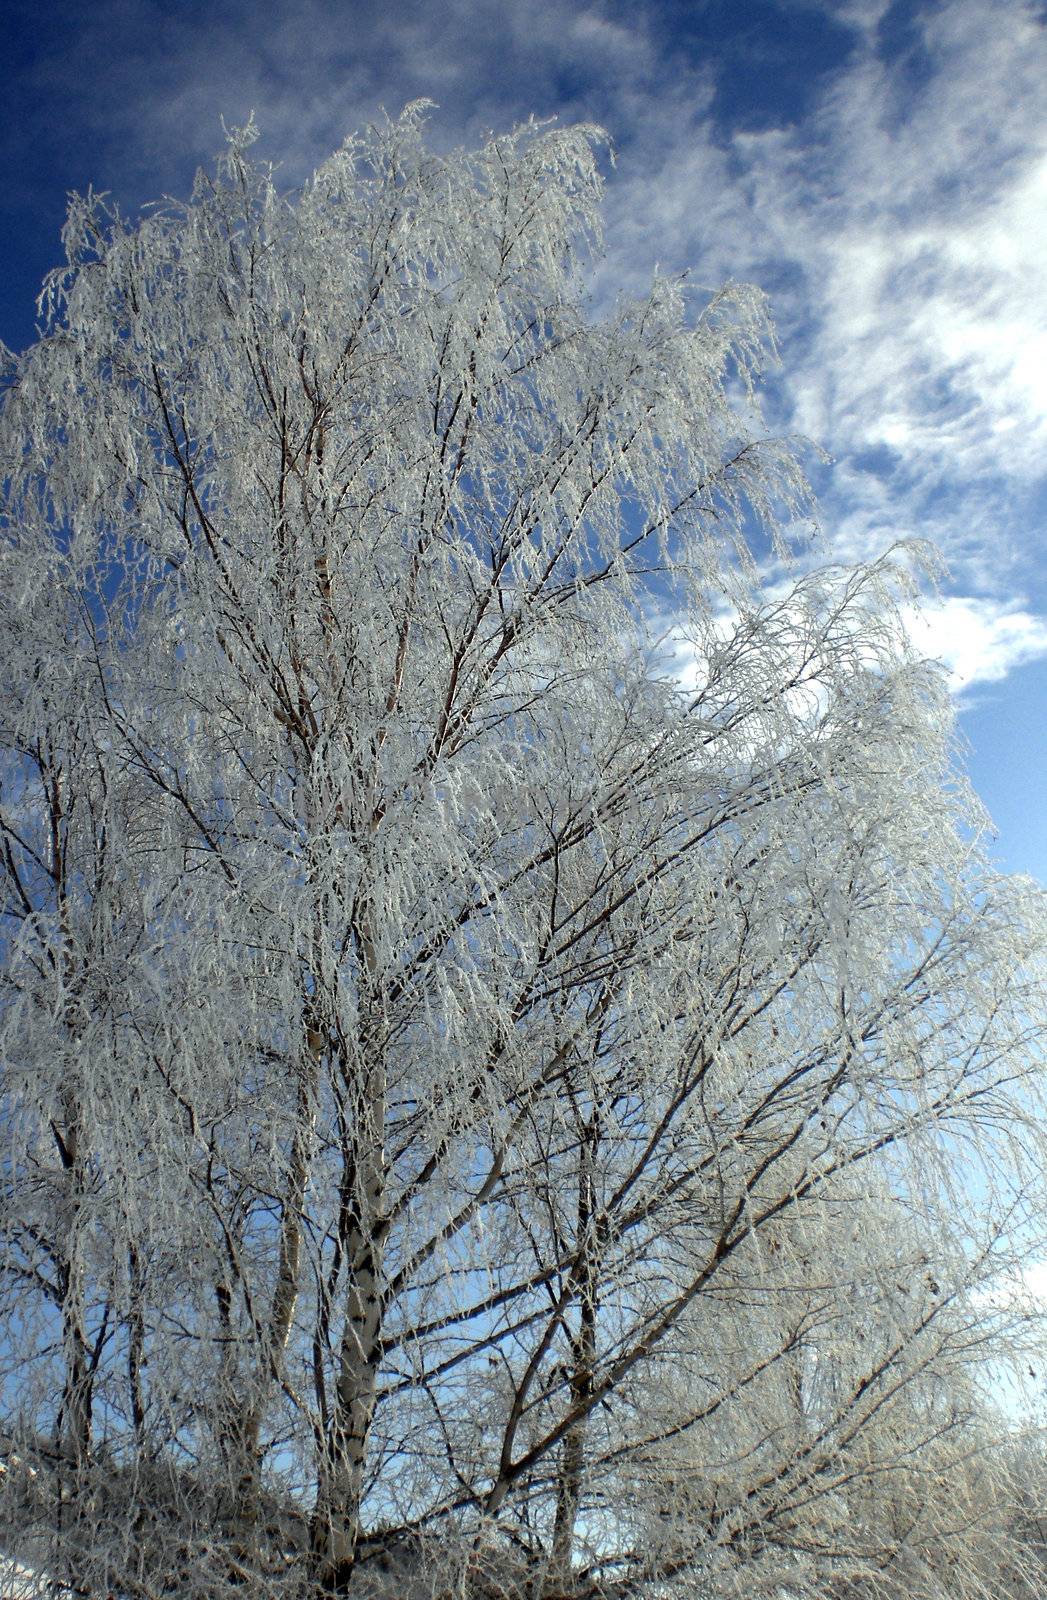 A snowy tree in Norway.